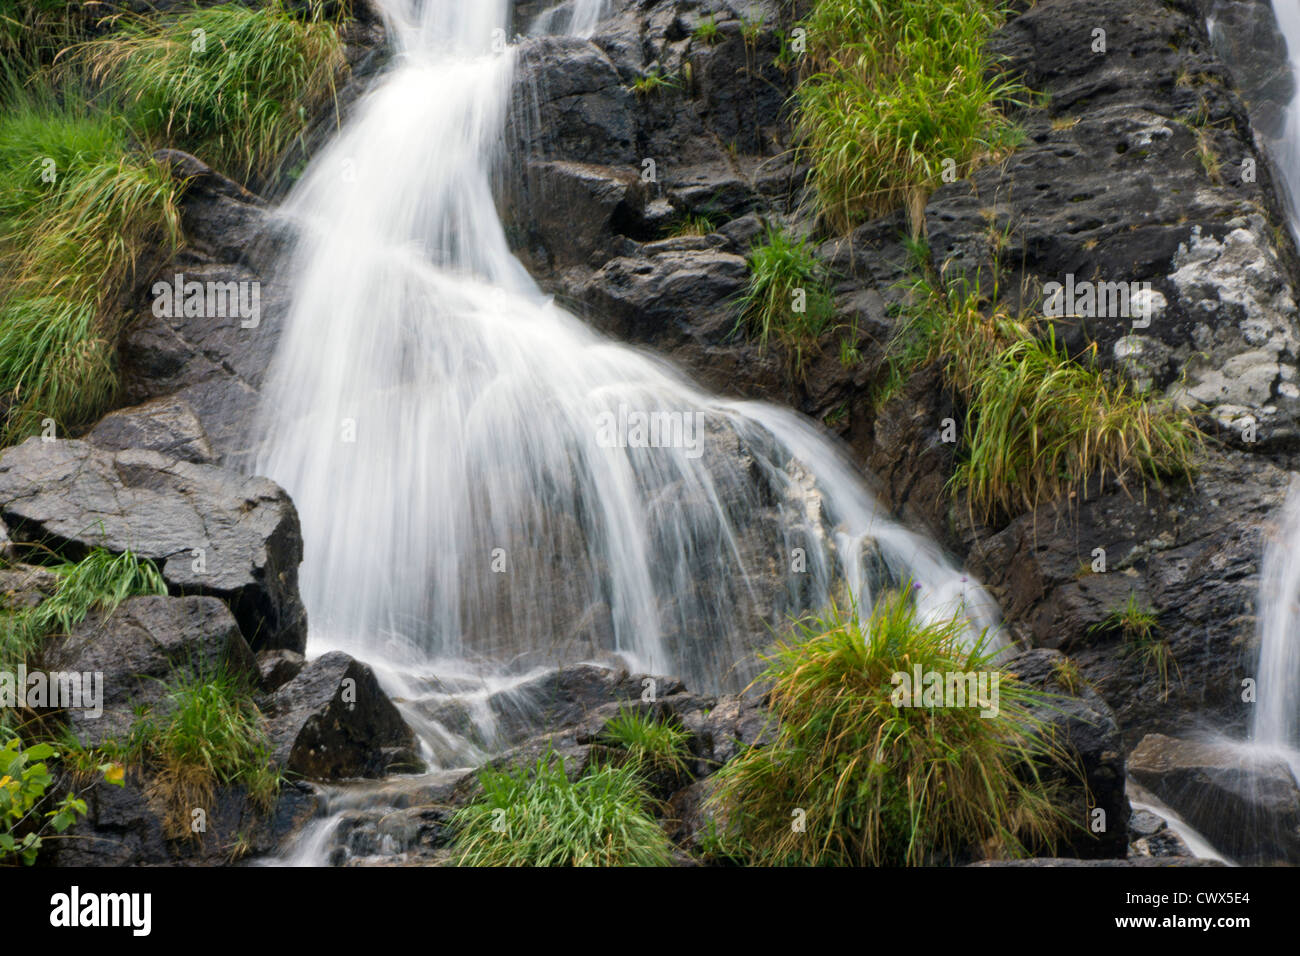 Wasserfall, Kaskaden, Pyrenäen, poring Wasser, nebligen Wasser Stockfoto